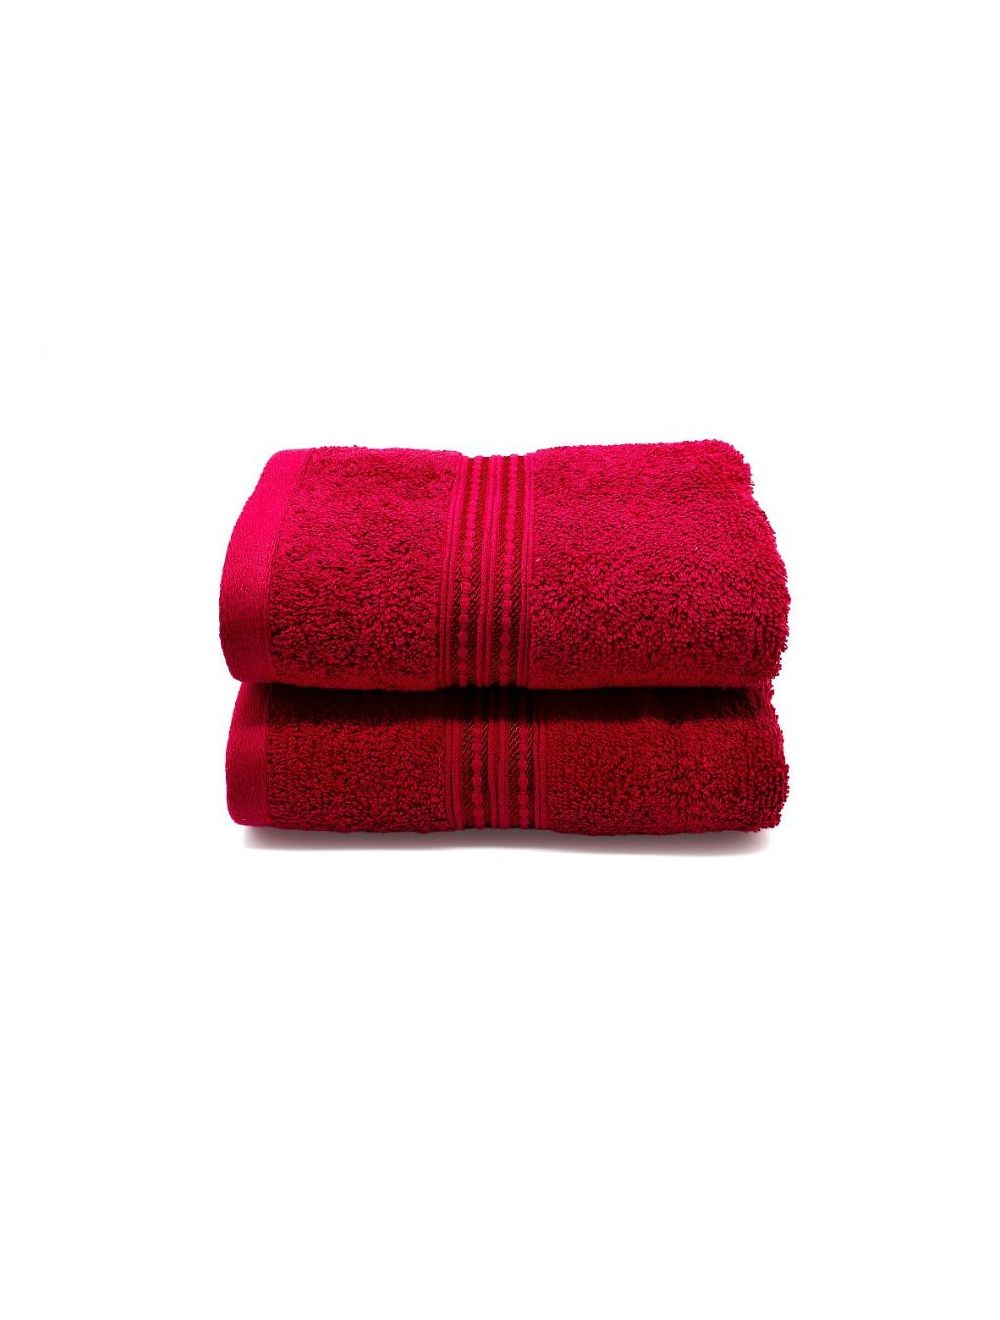 Rahalife 100% Cotton 2-Piece Hand Towel Set, Classic Collection, Maroon-14RLHT021